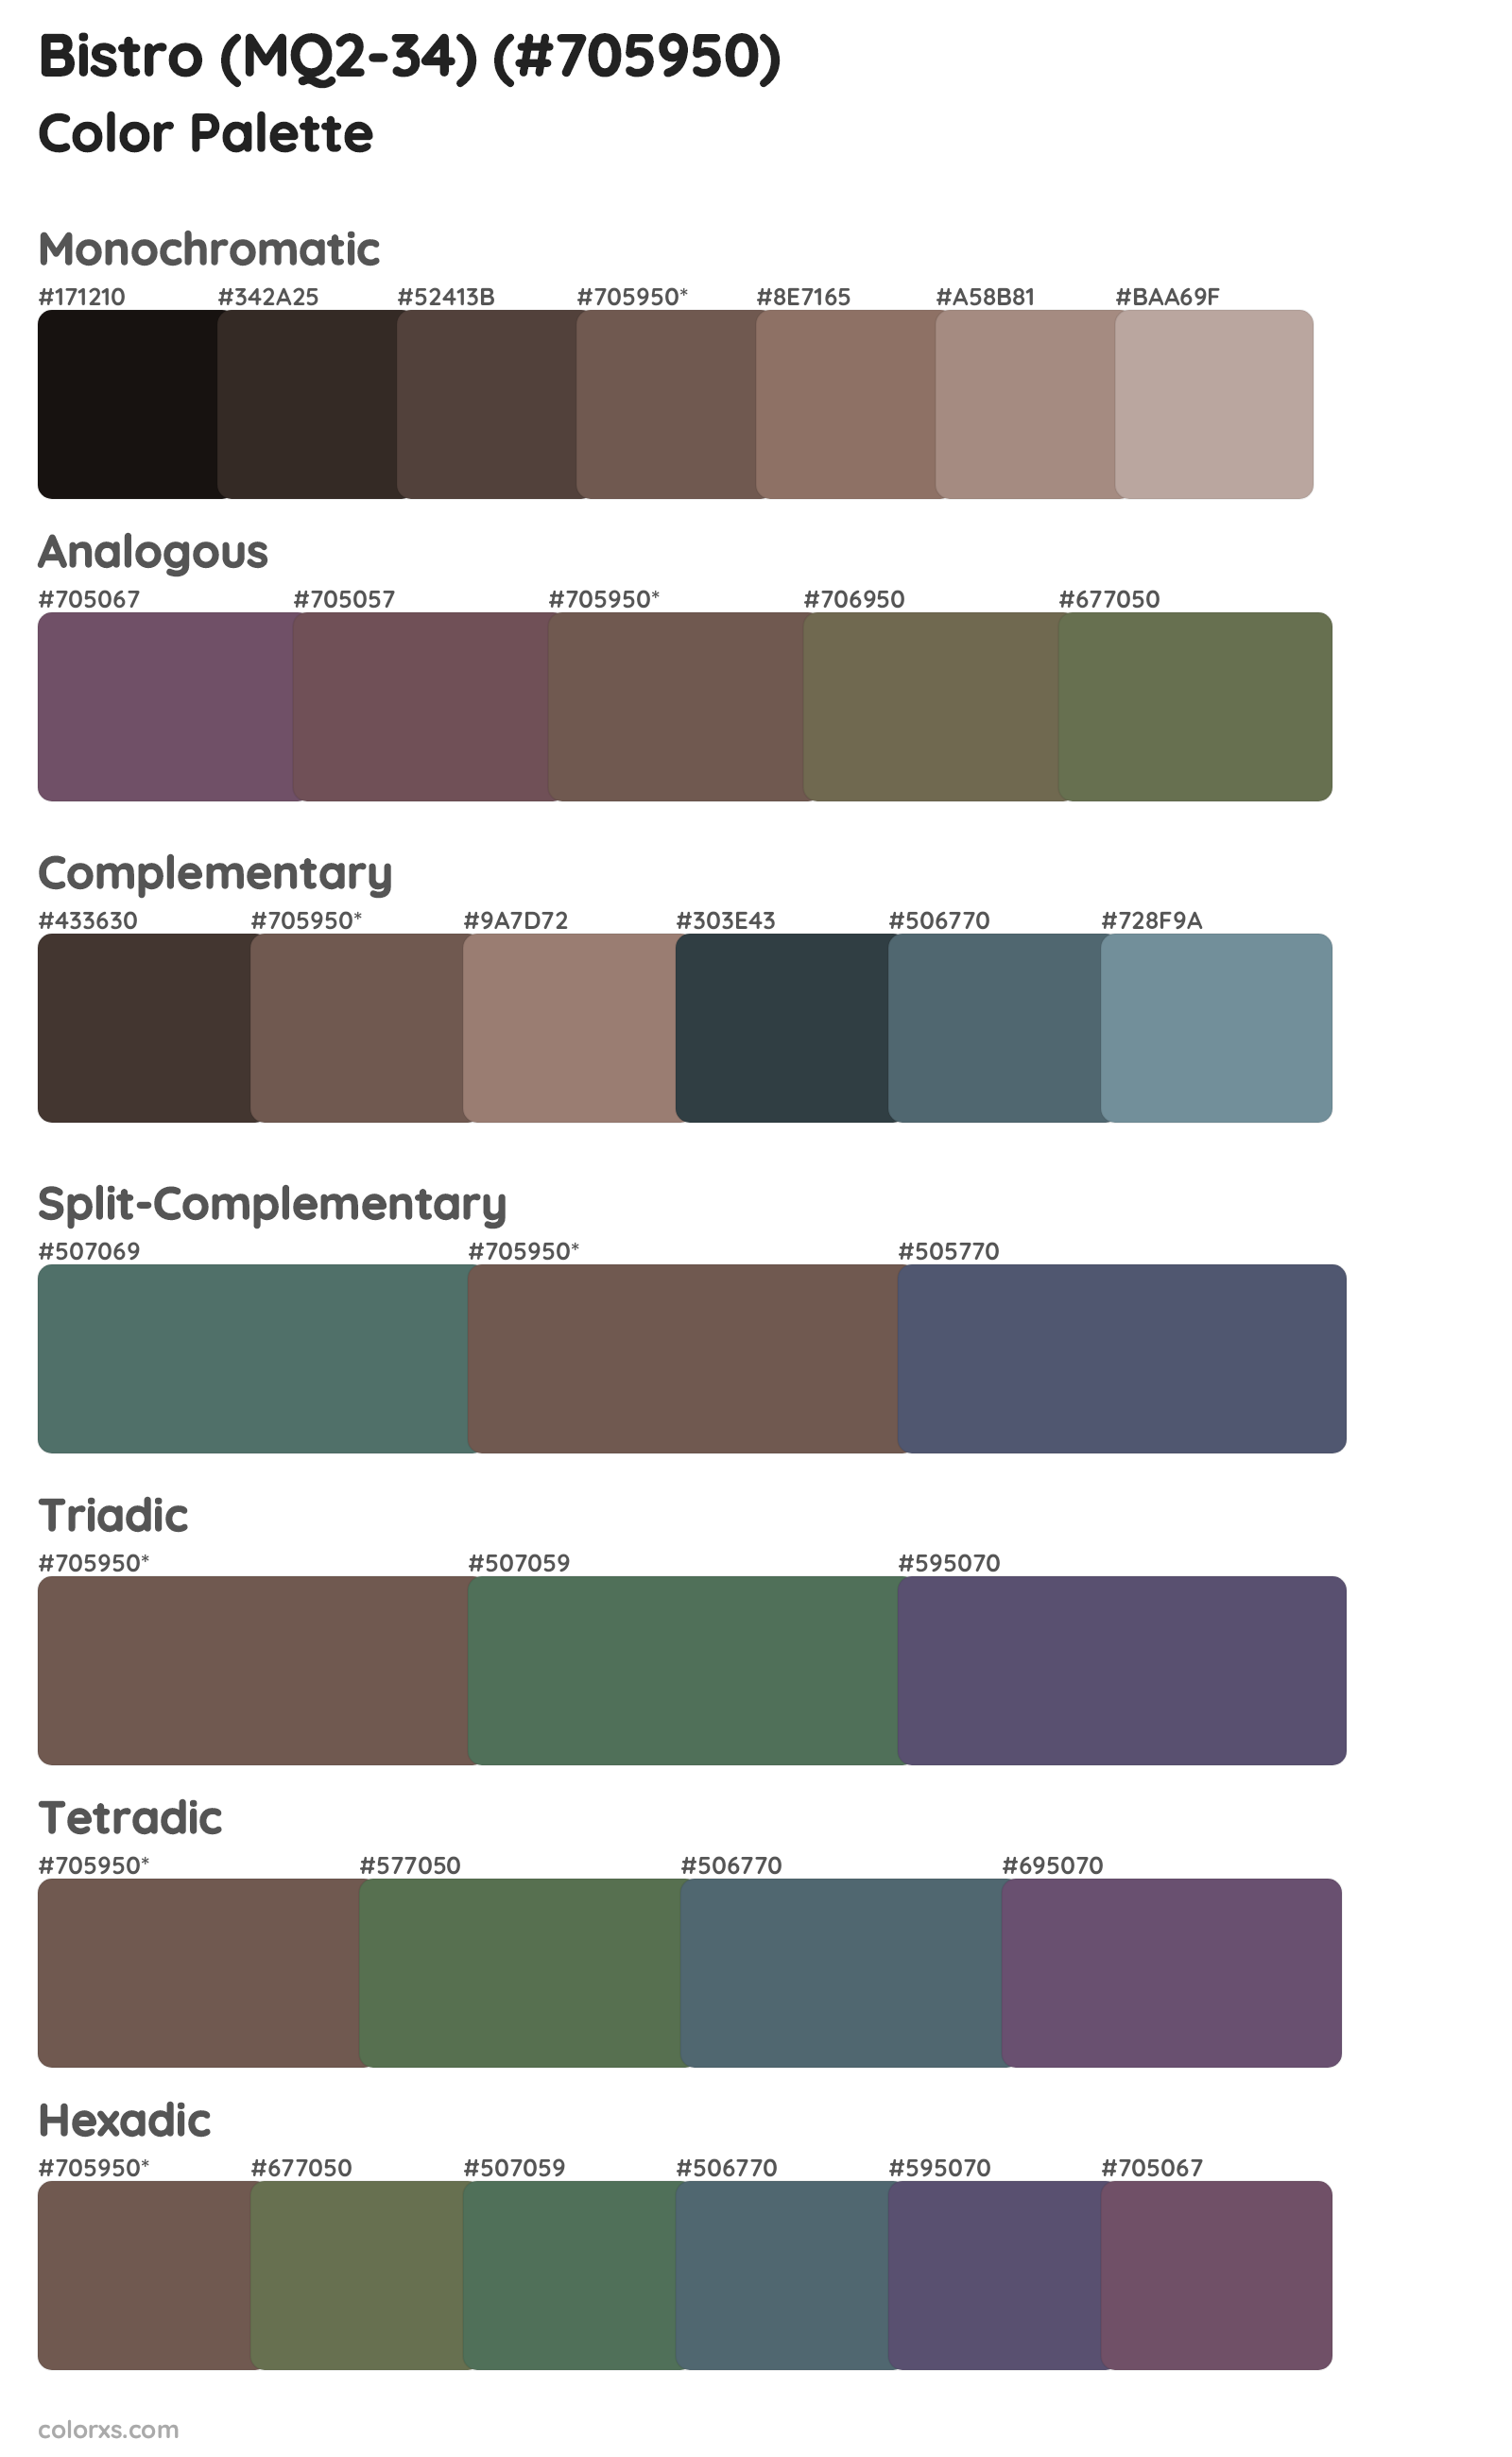 Bistro (MQ2-34) Color Scheme Palettes